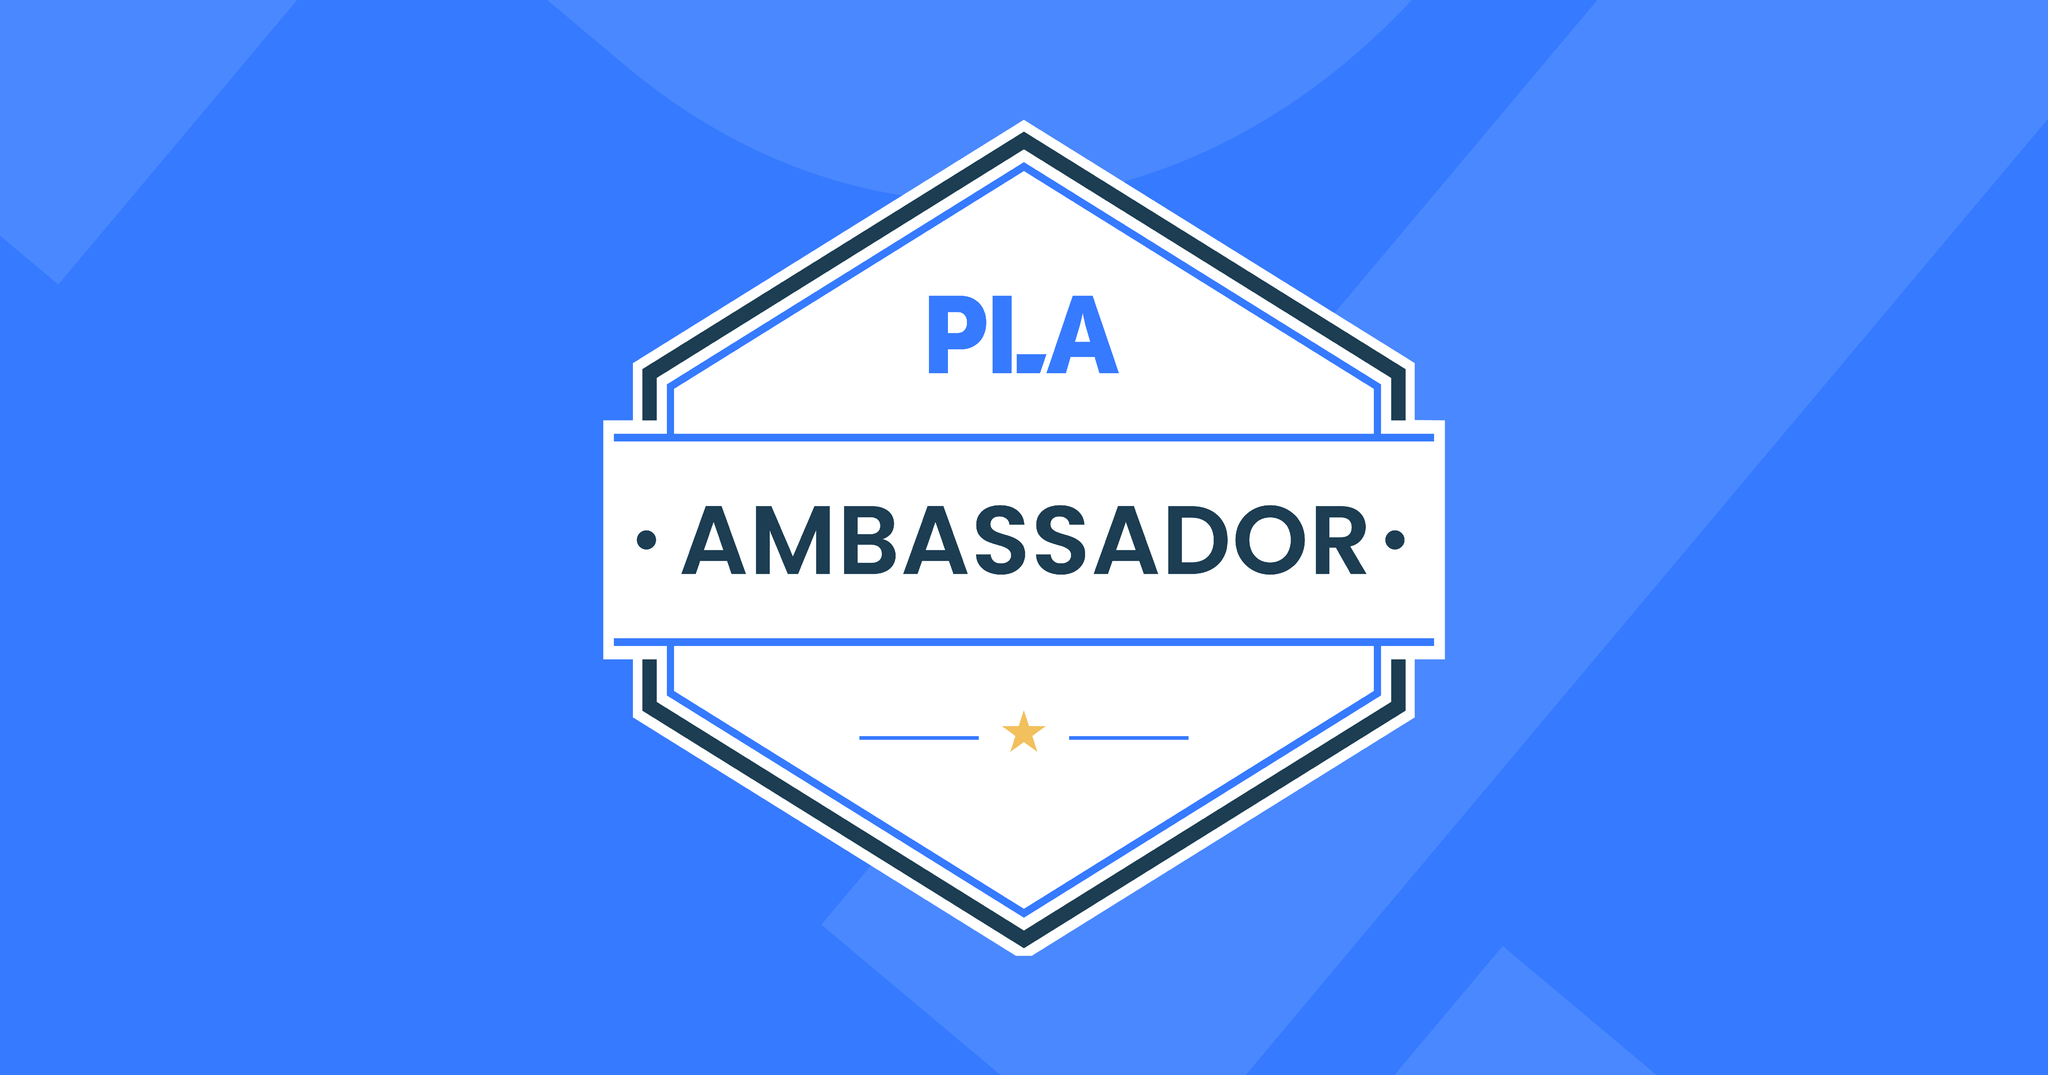 PLA ambassadors